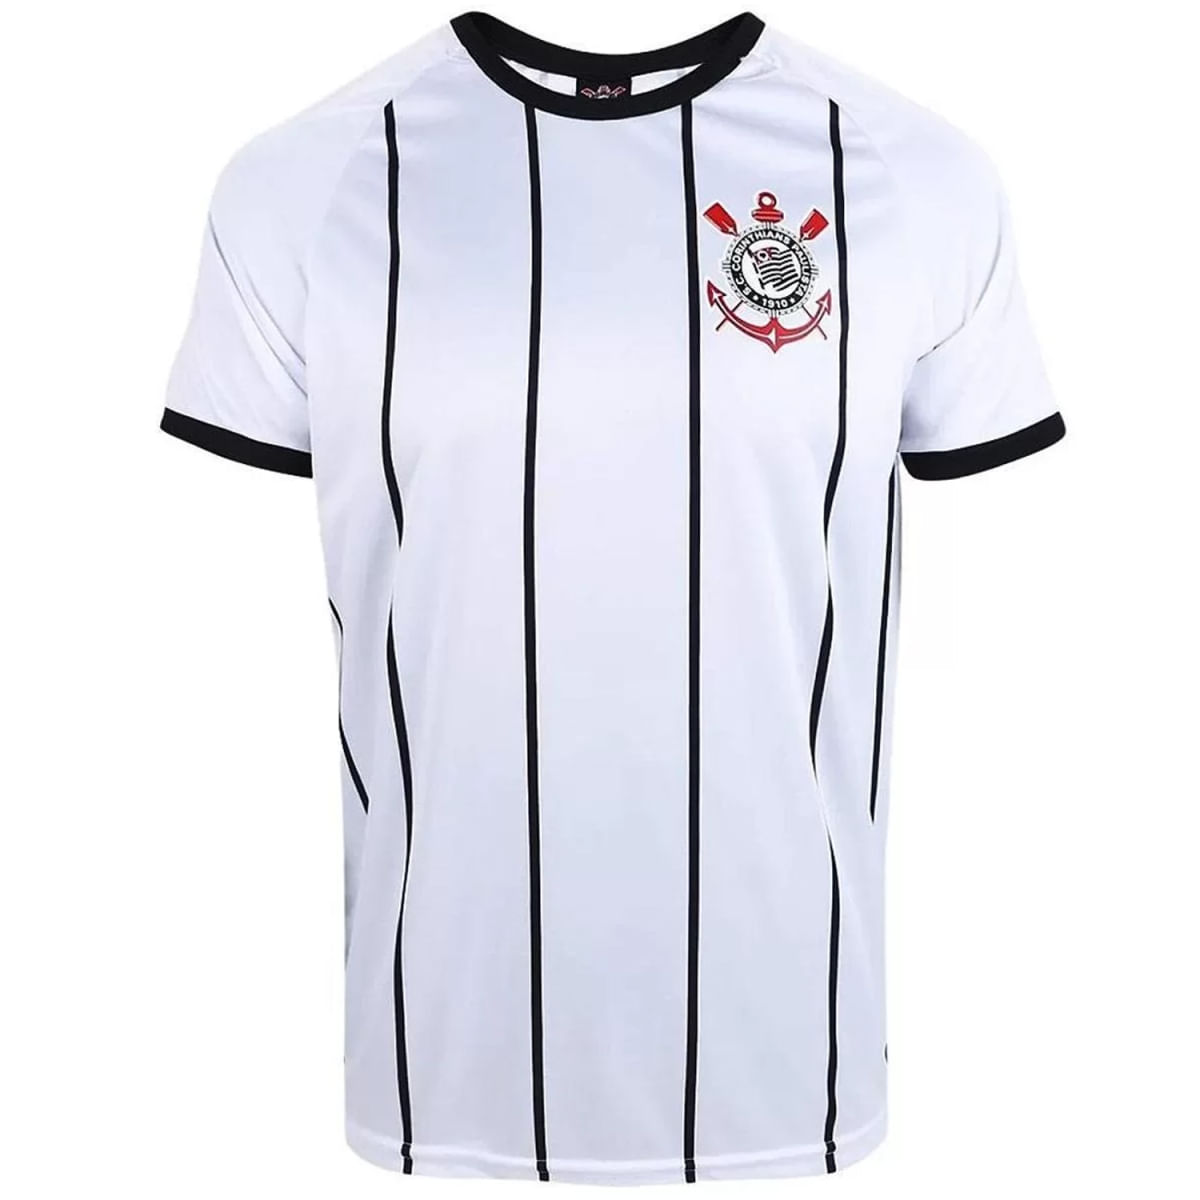 Camiseta SPR Corinthians Winner Masculino - Branco e Preto